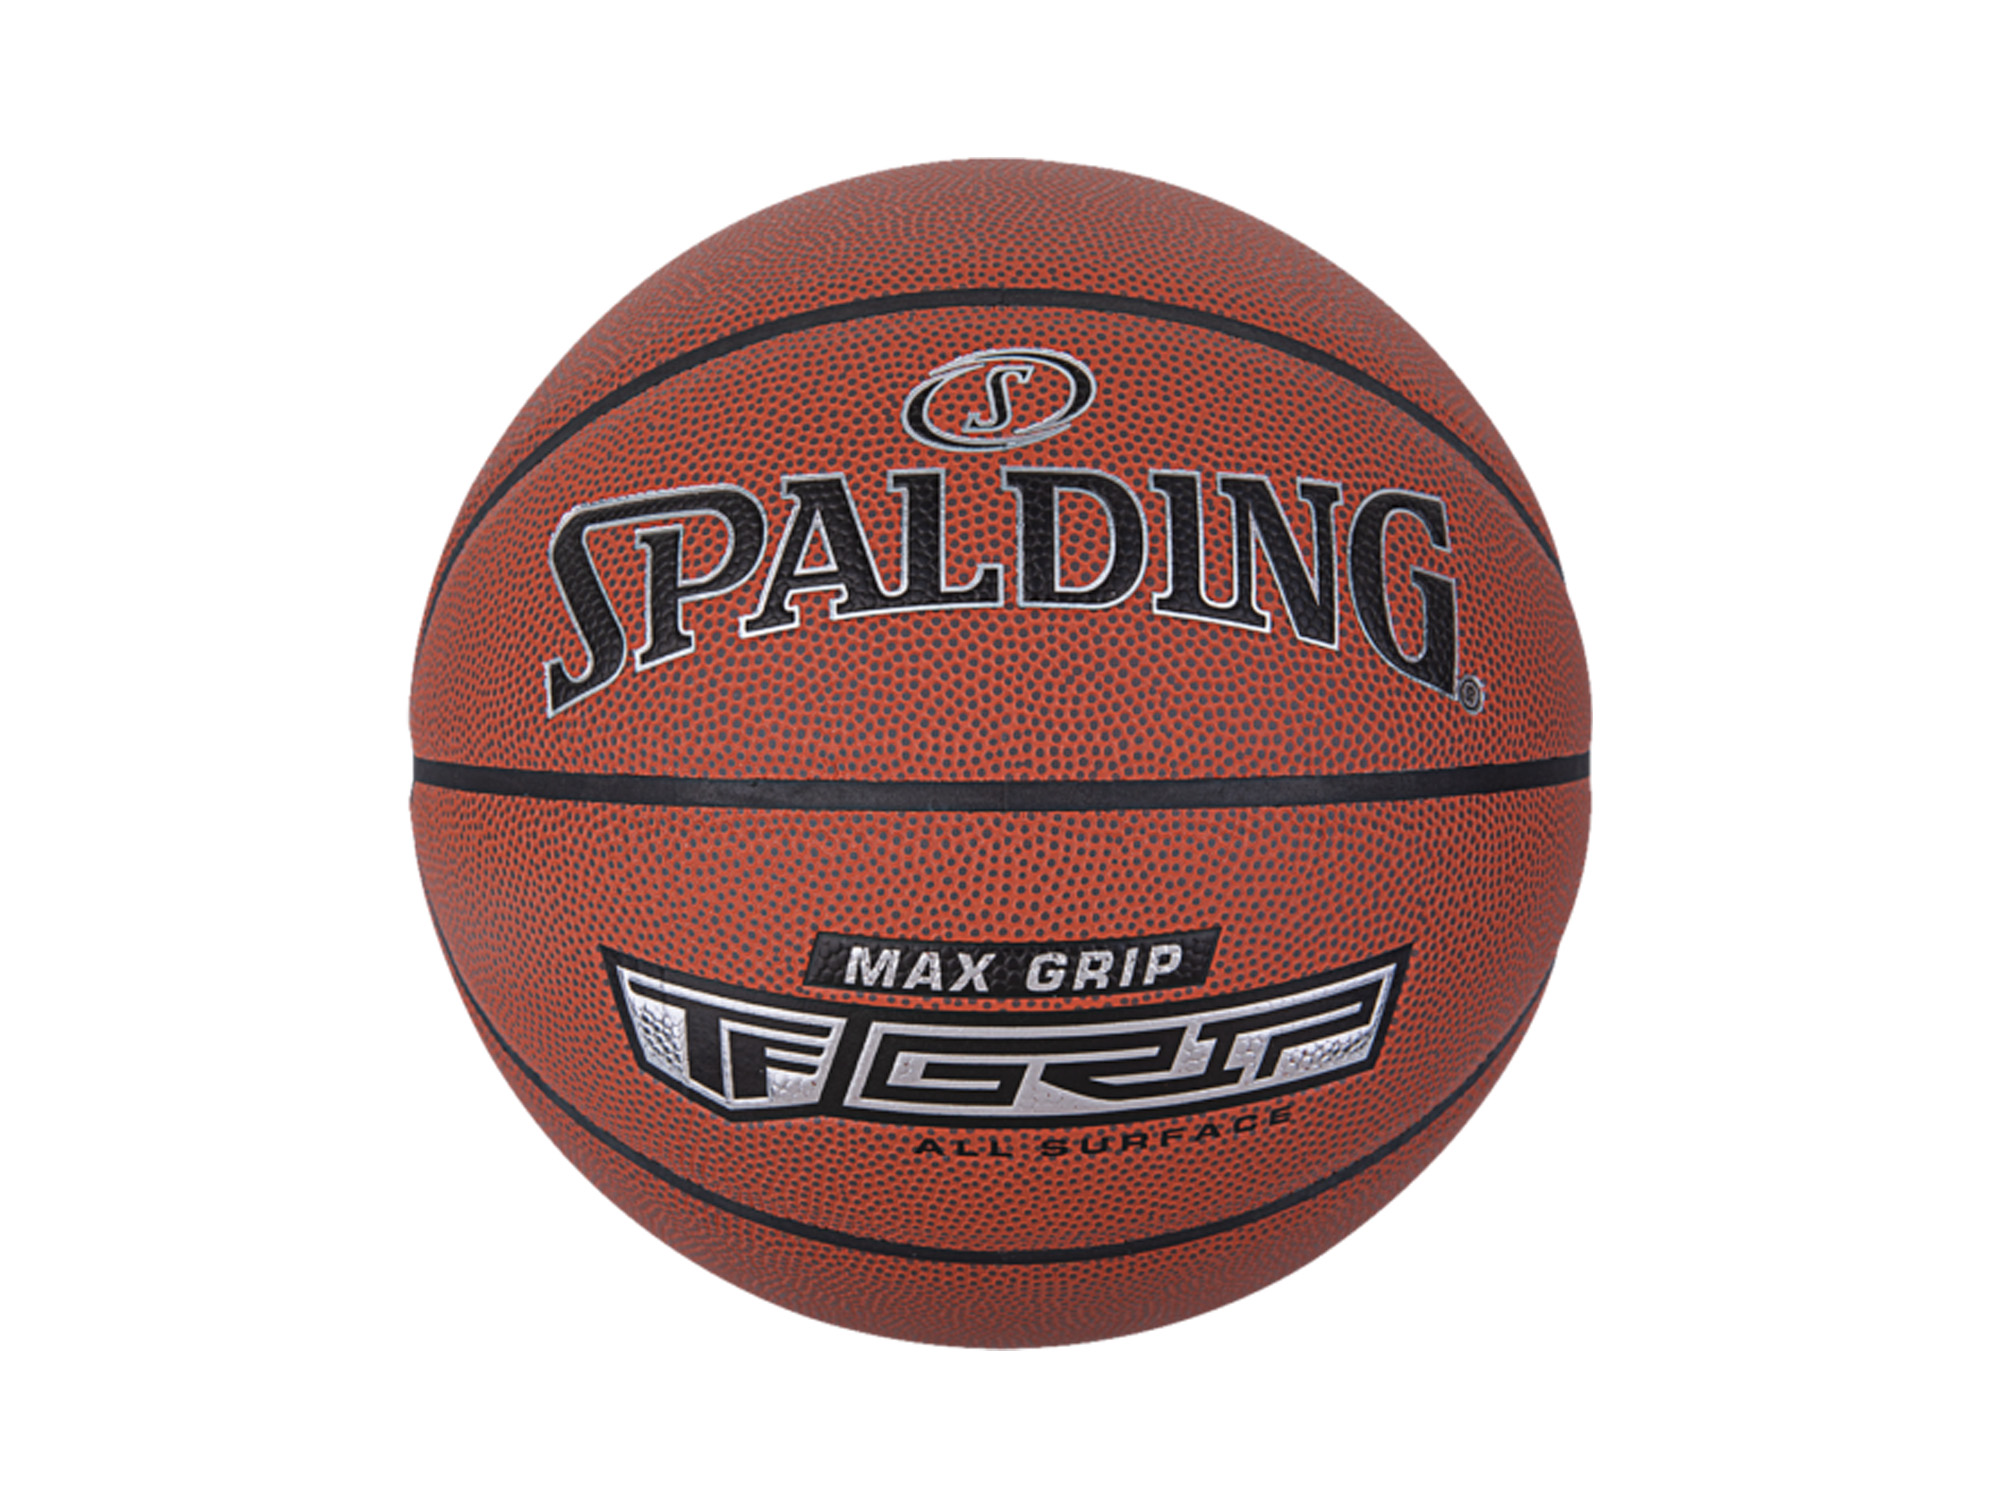 Spalding Max Grip Basketball